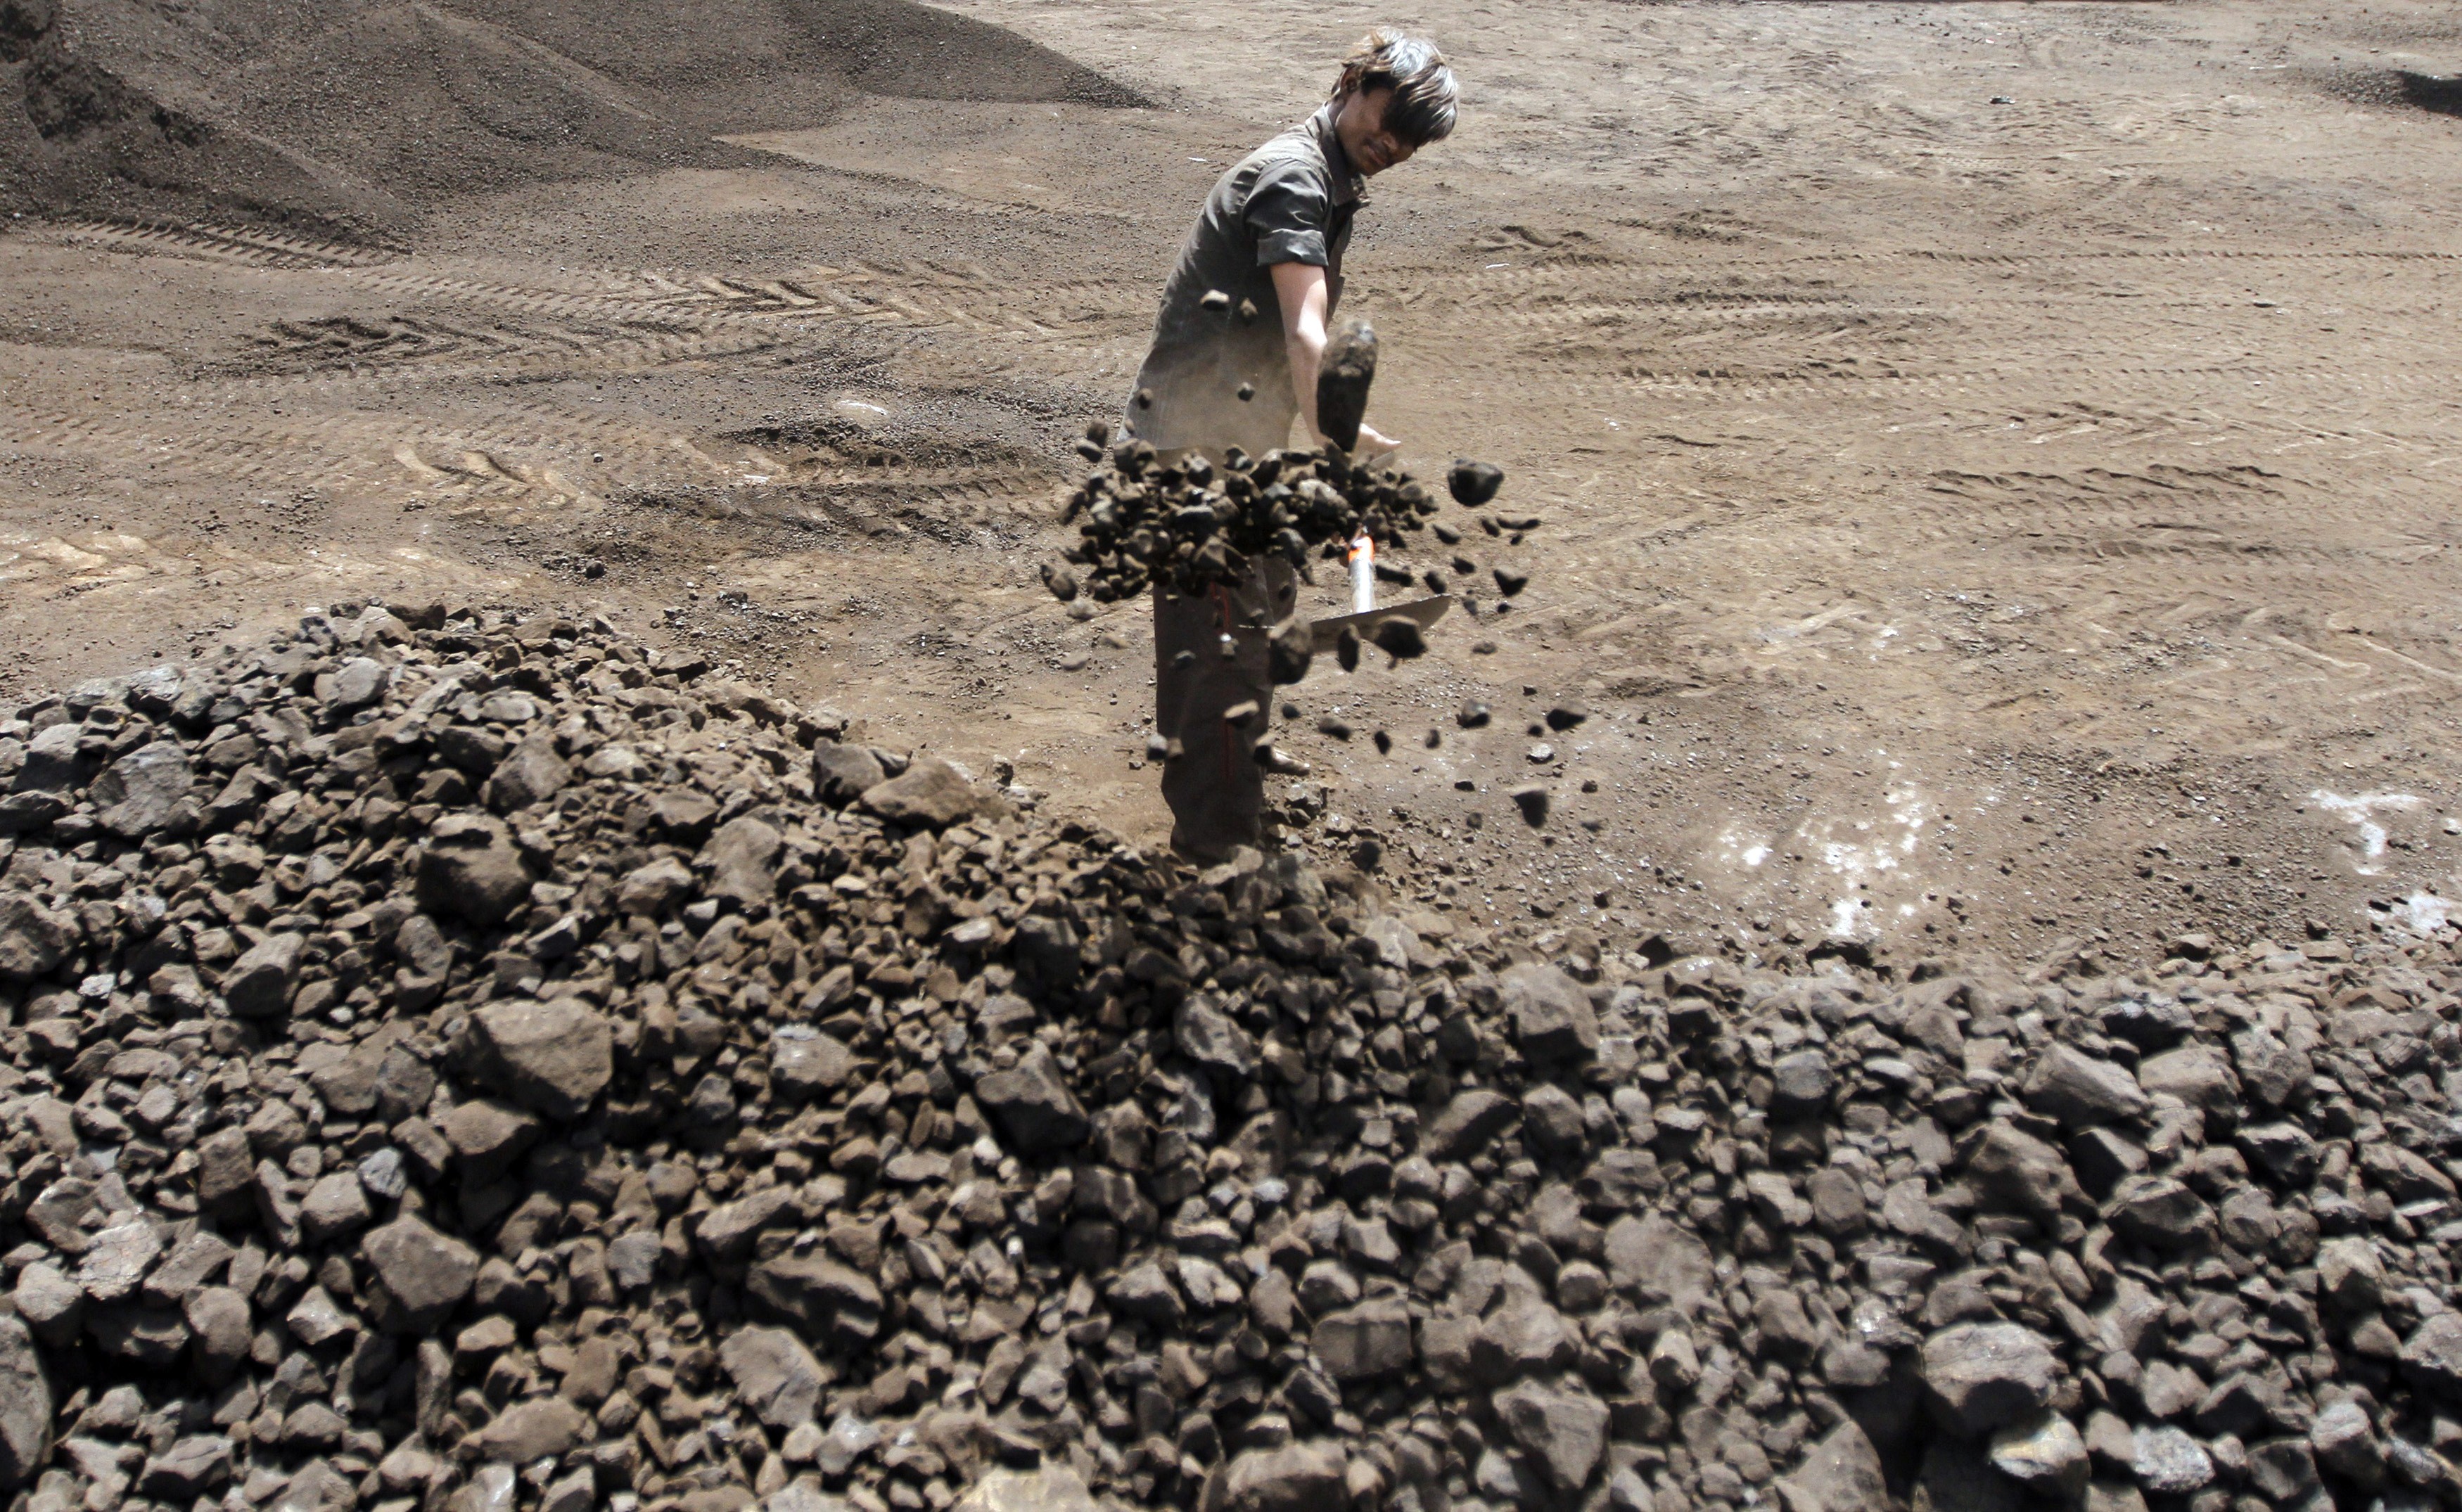 A worker shovels coal in a coal deposit yard.